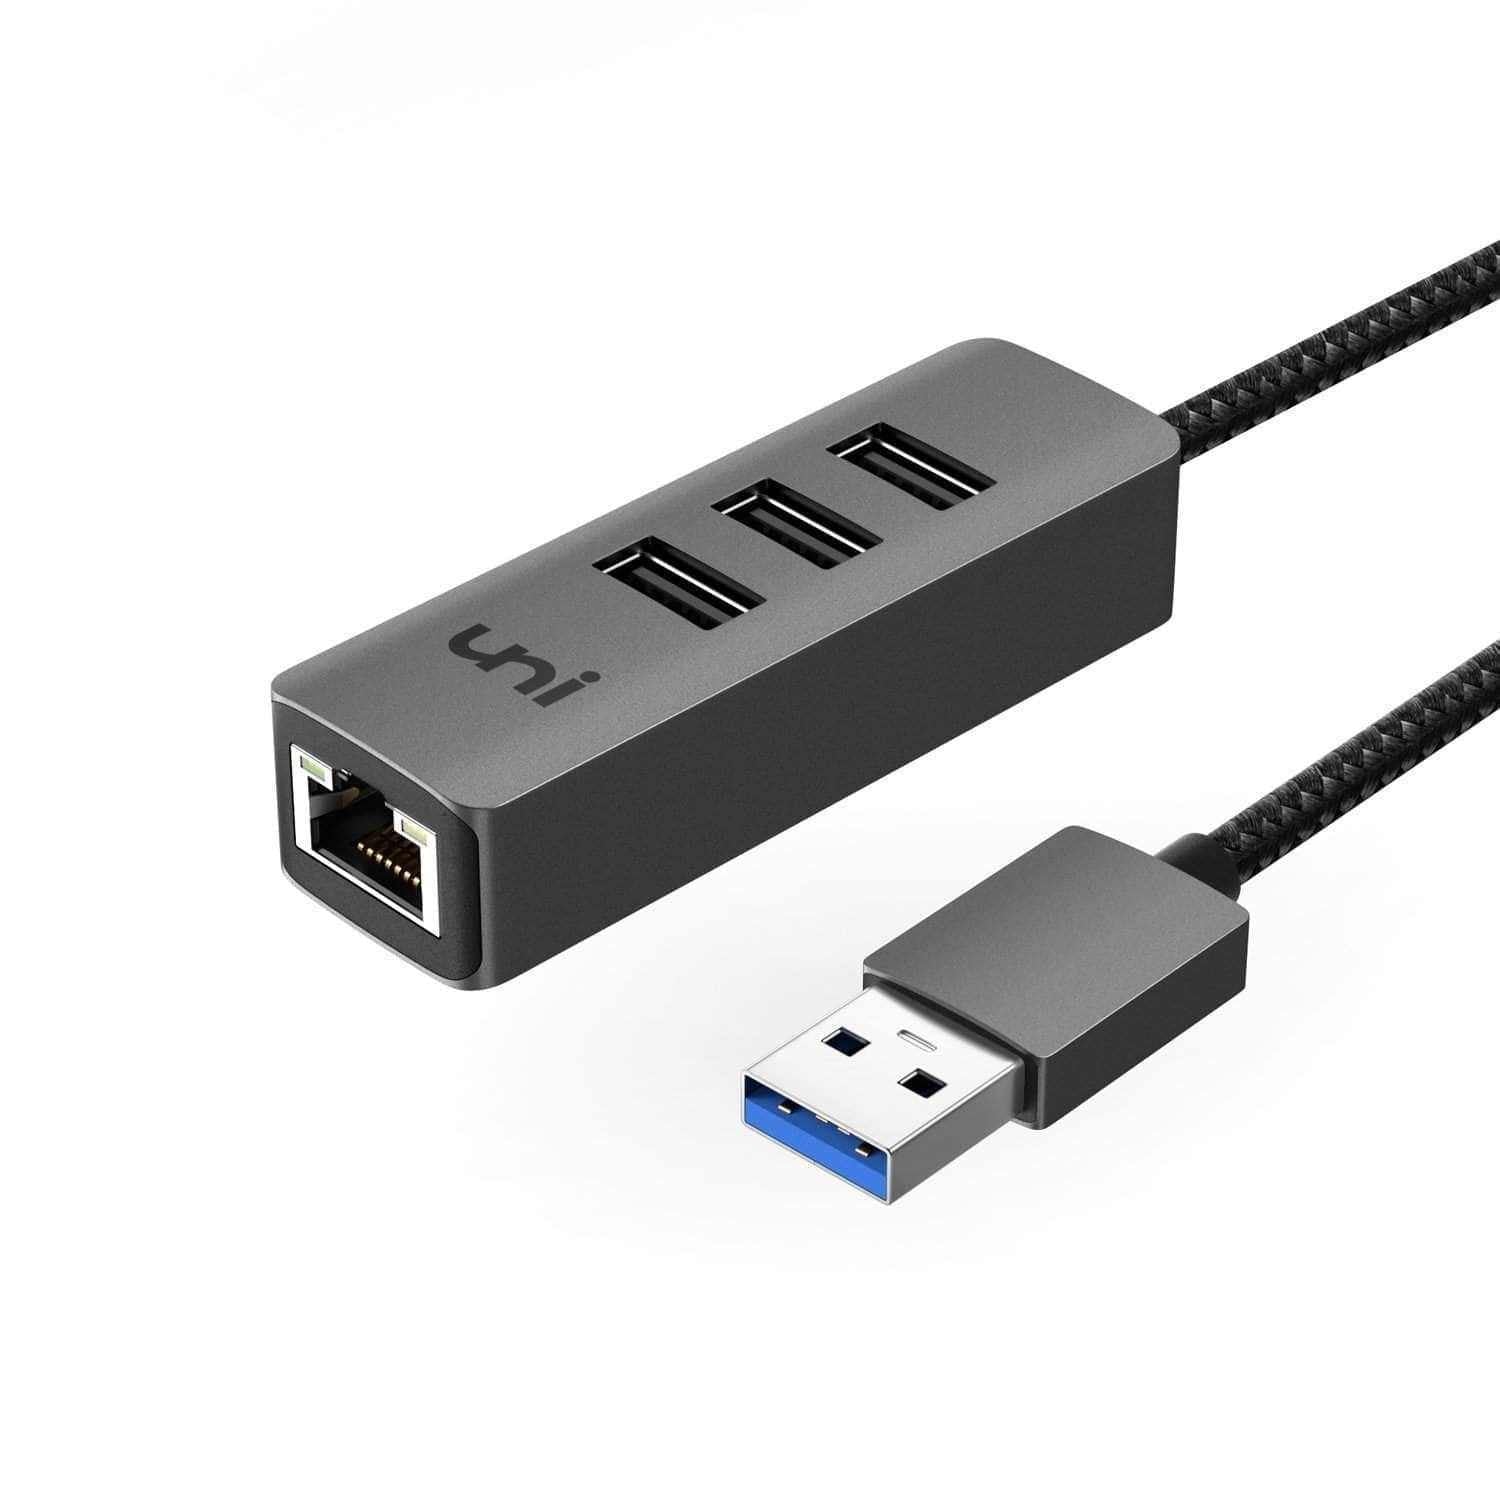 uni® USB Hub with 1G Ethernet Adapter, USB 3.0 Gigabit Ethernet RJ45 Adapter, USB Adaptor, Perfect Size, 5 Gbps | Aluminum | Ultra-Slim & Portable